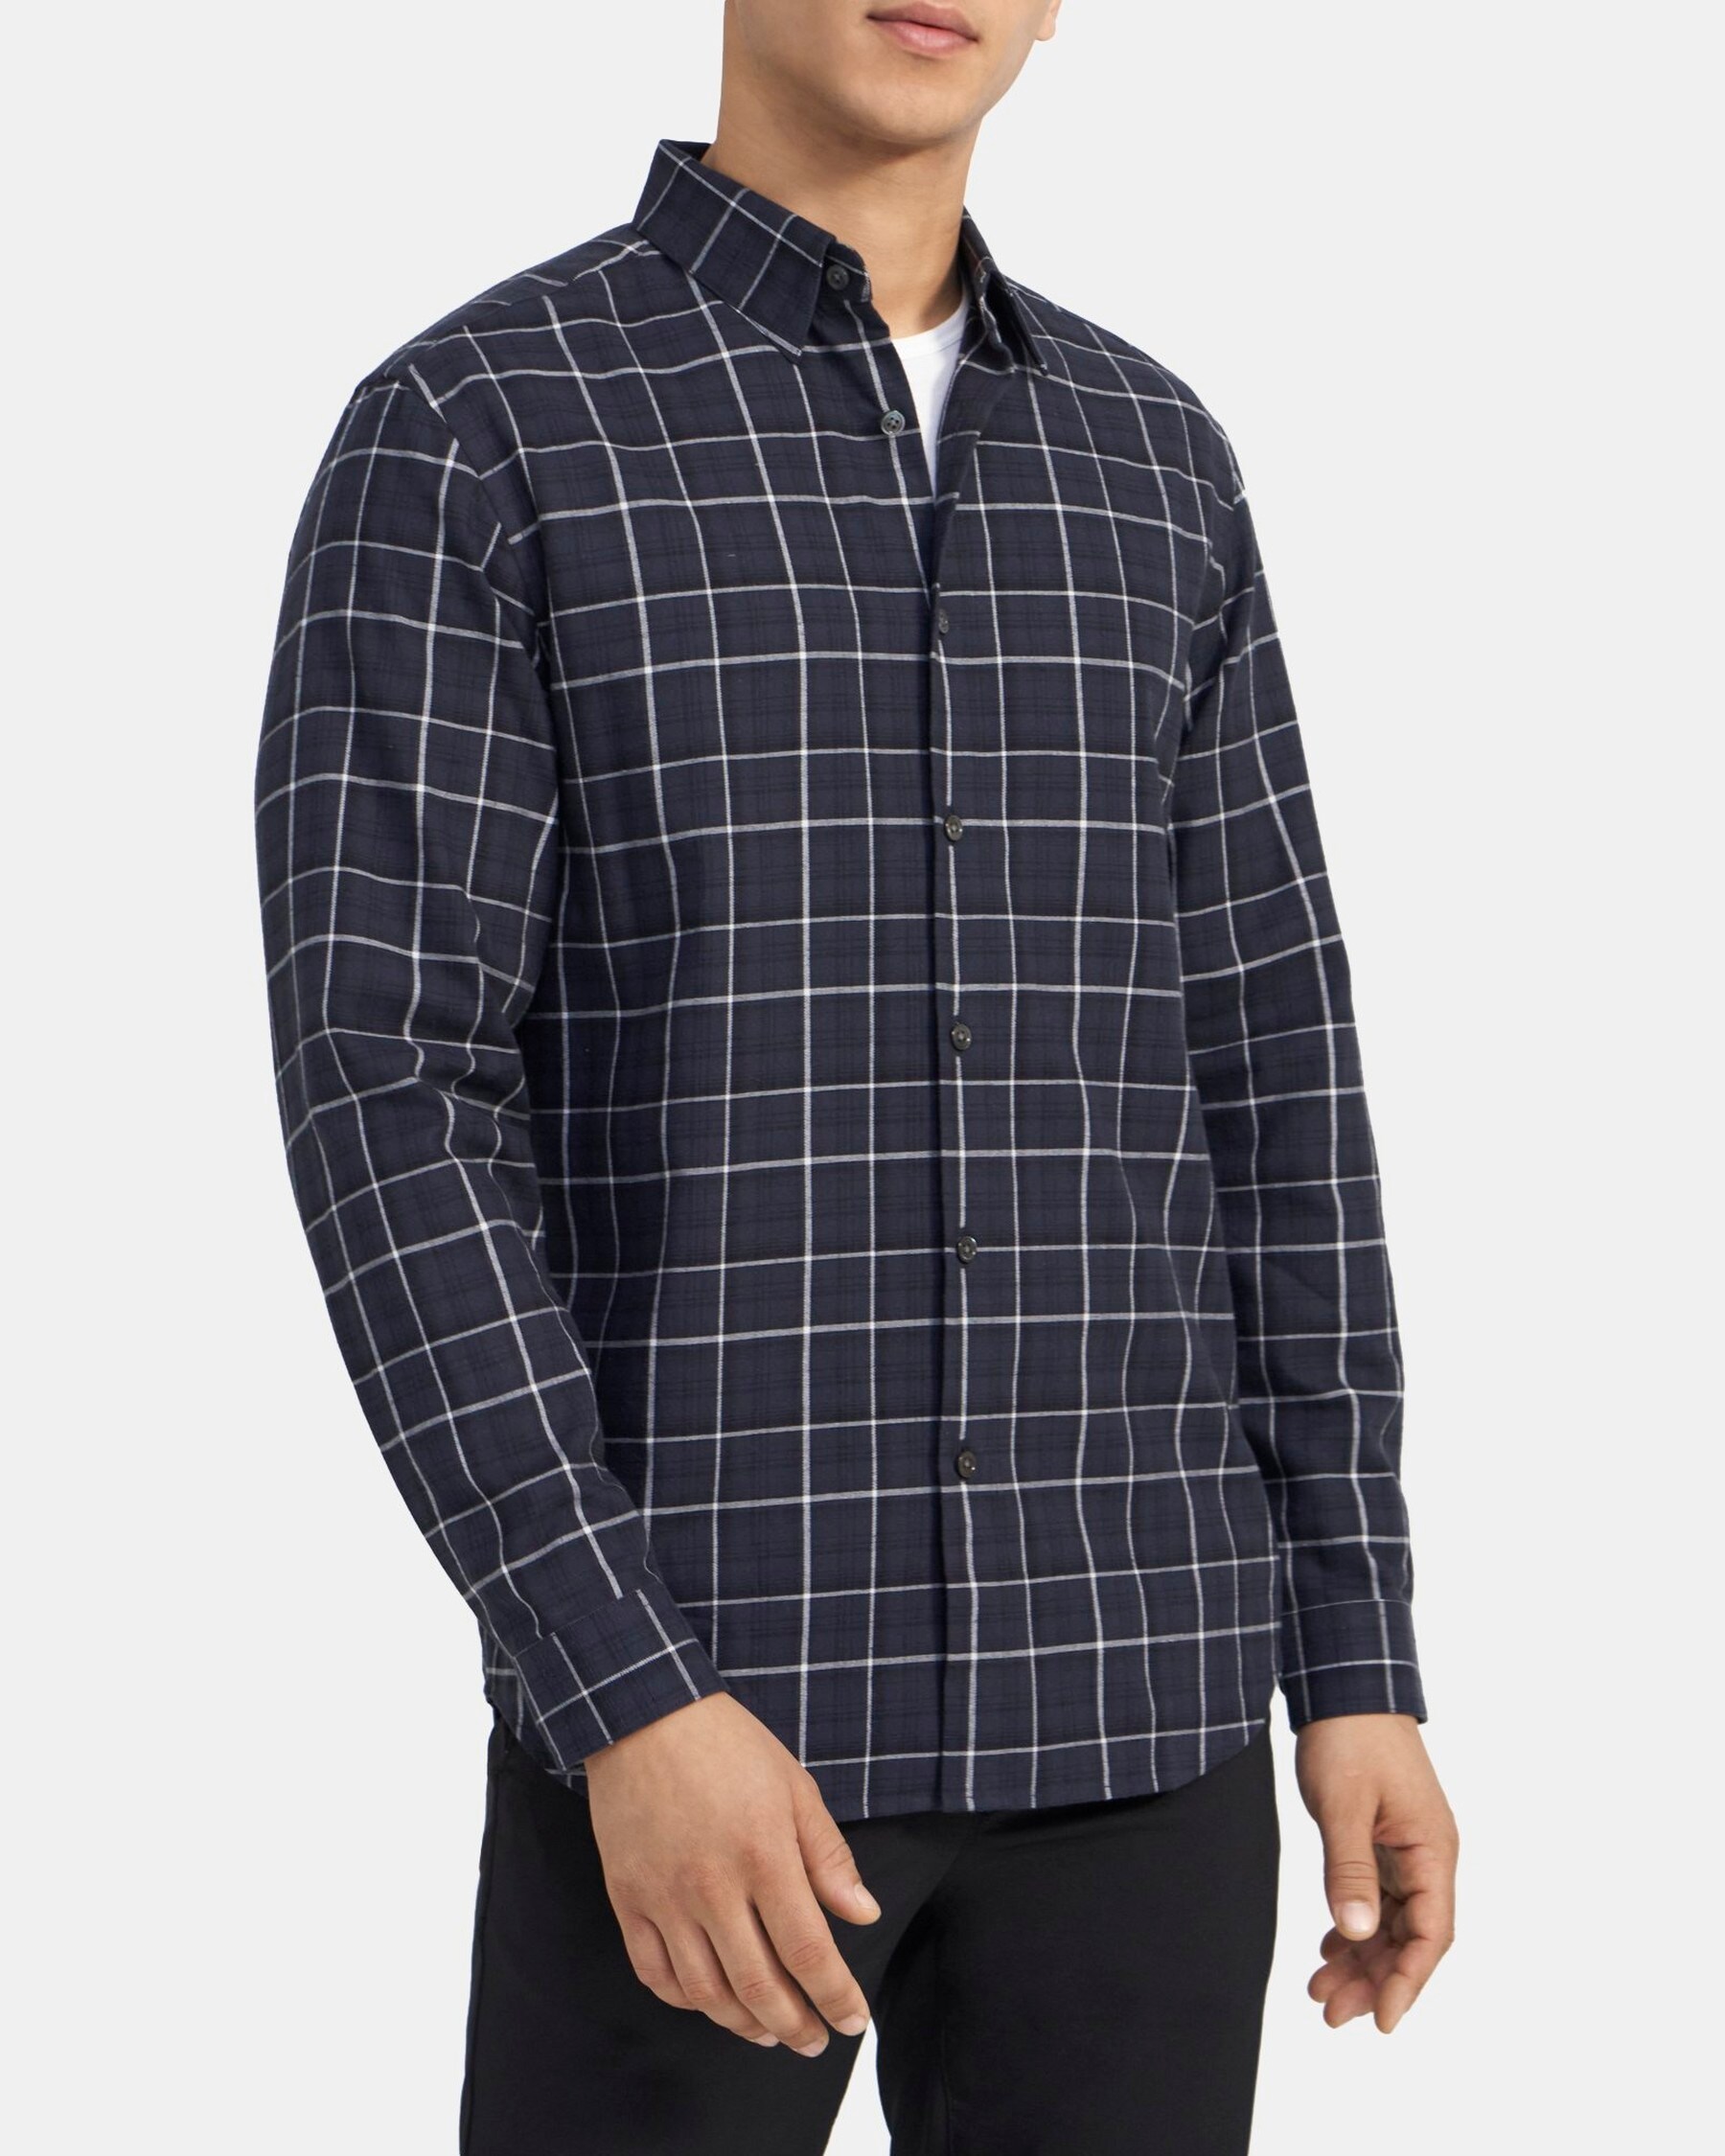 Standard-Fit Shirt in Ombré Grid Cotton